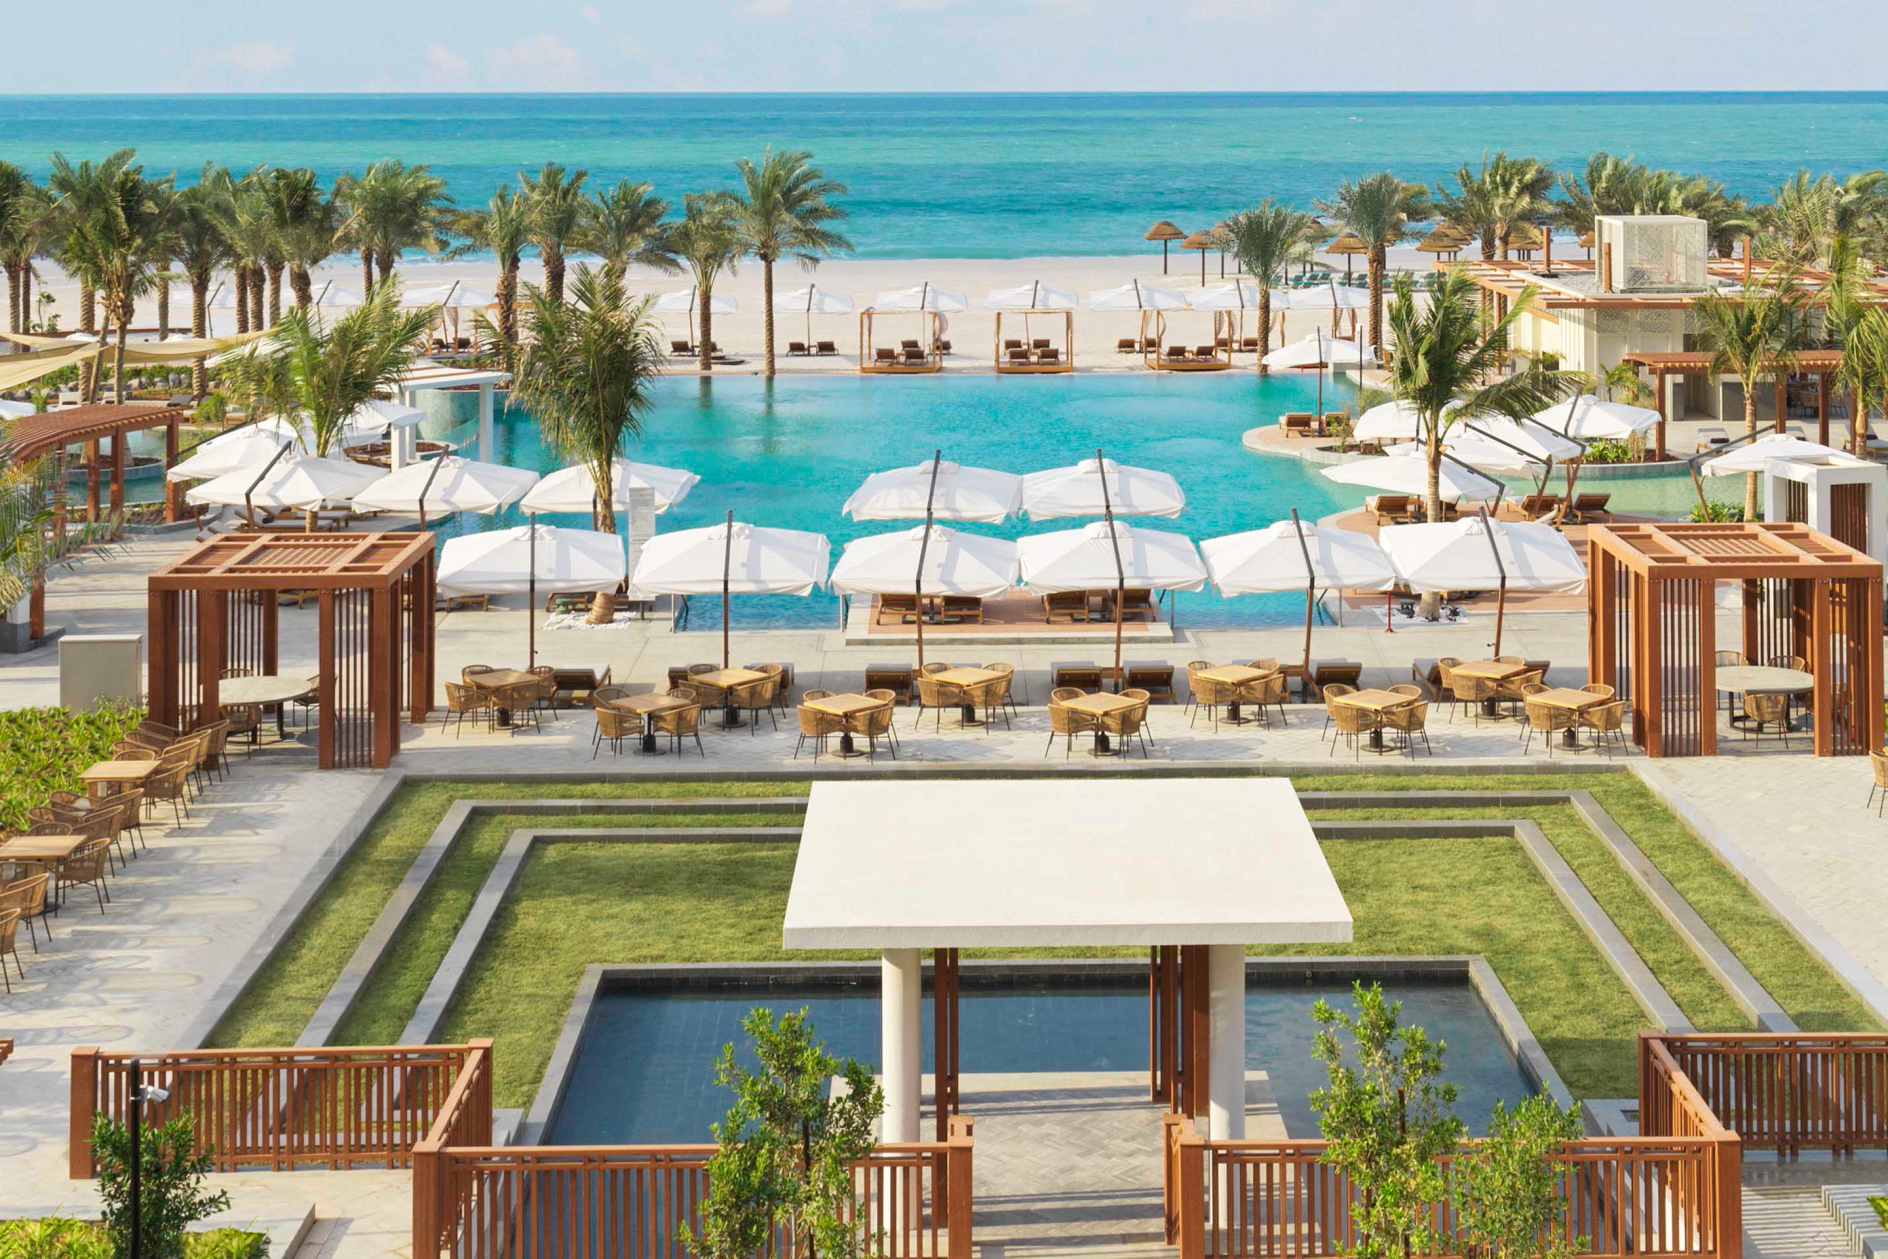 InterContinental Ras Al Khaimah Mina Al Arab Resort & Spa. Click to enlarge.